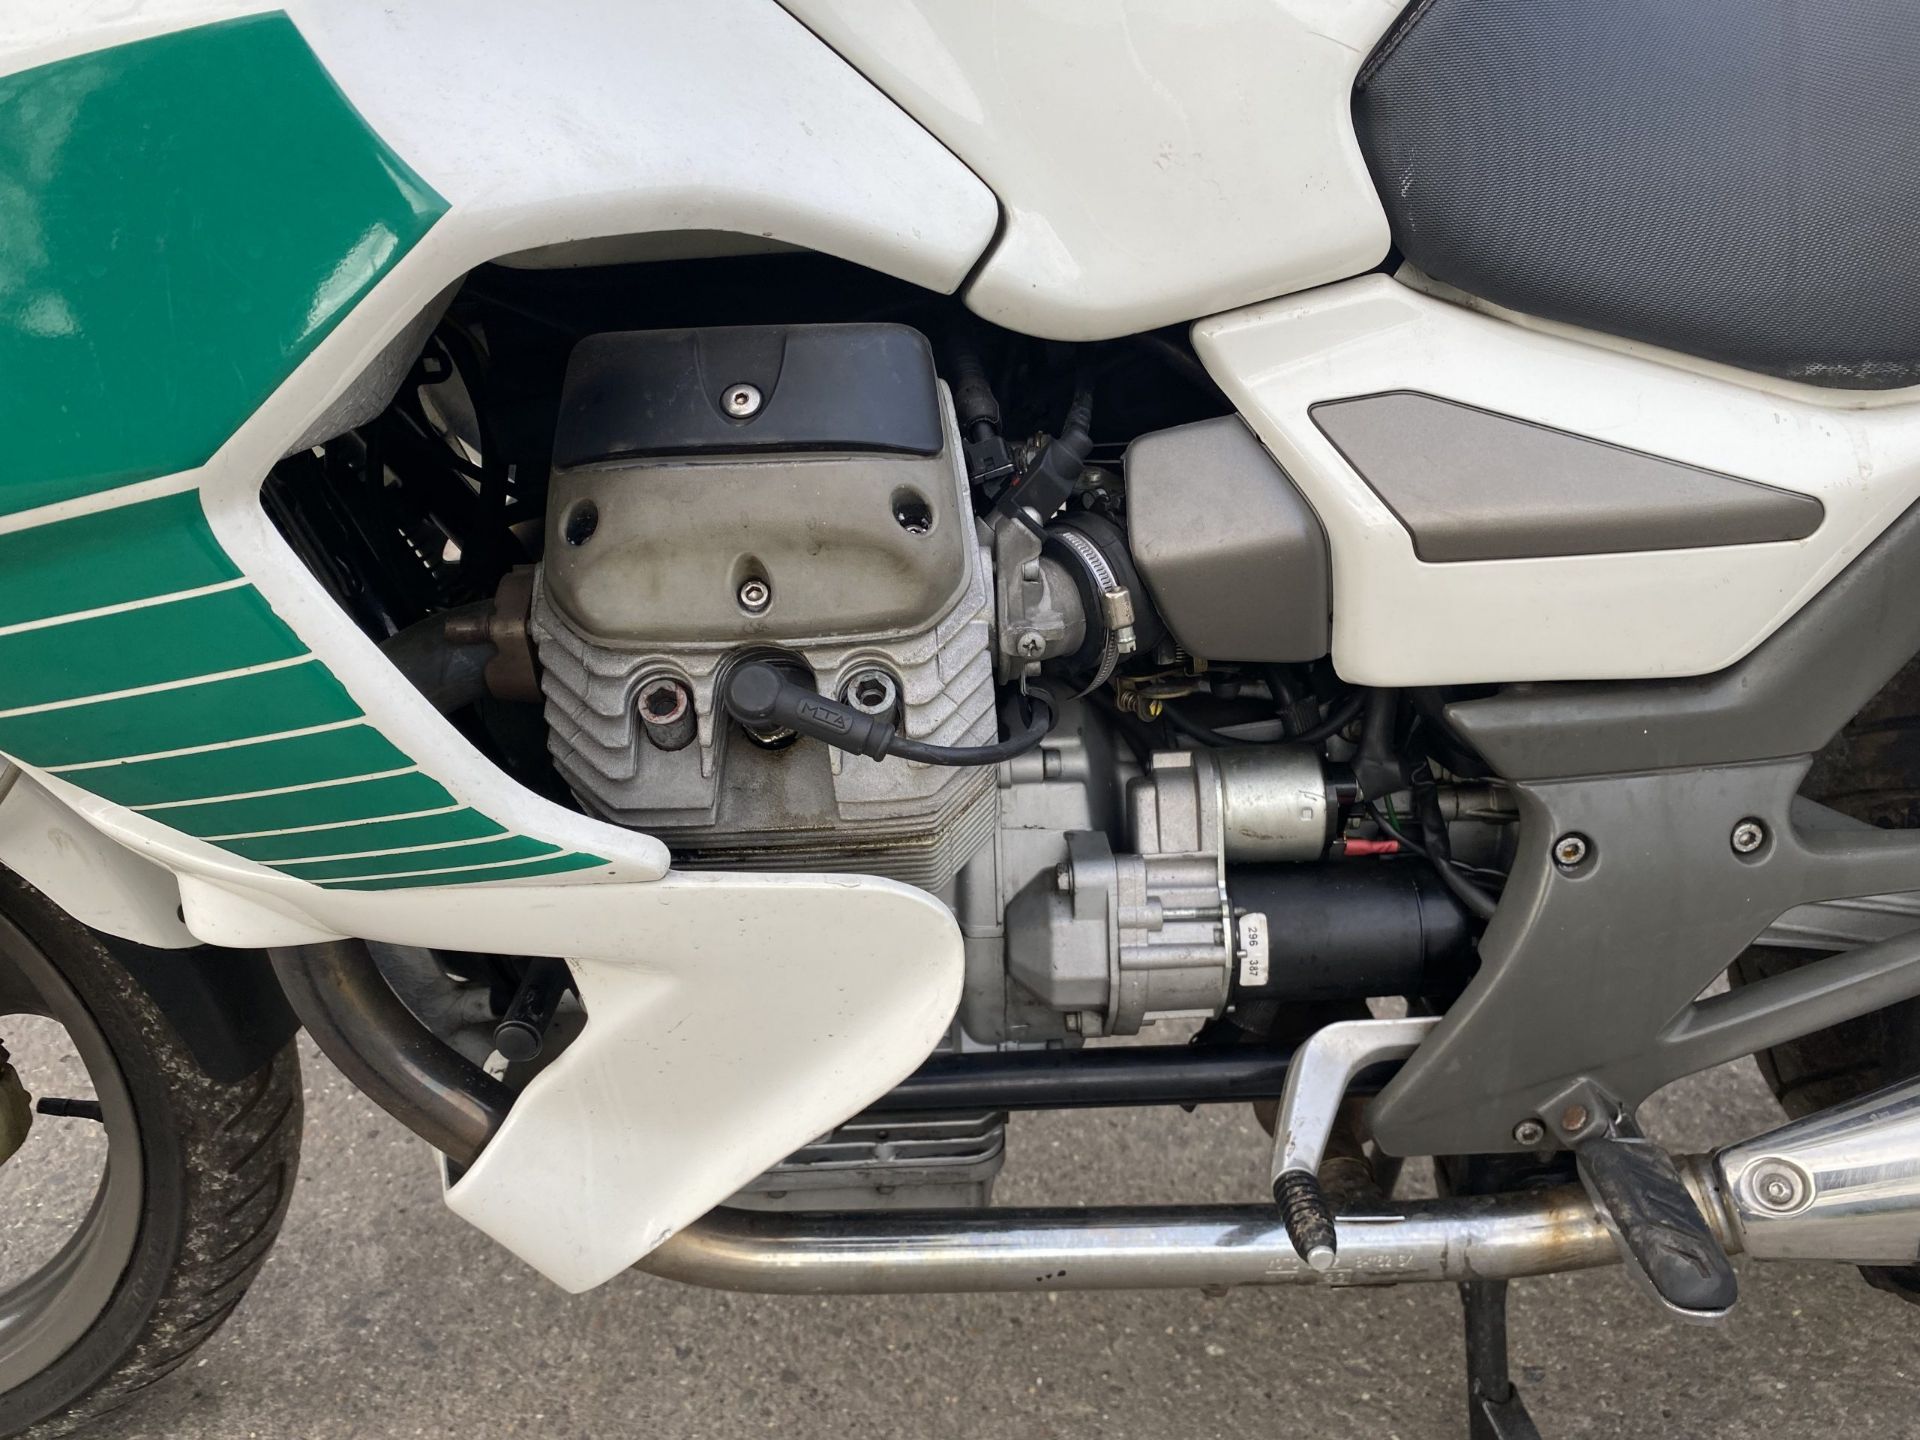 Moto Guzzi Breva 750 - Image 16 of 28